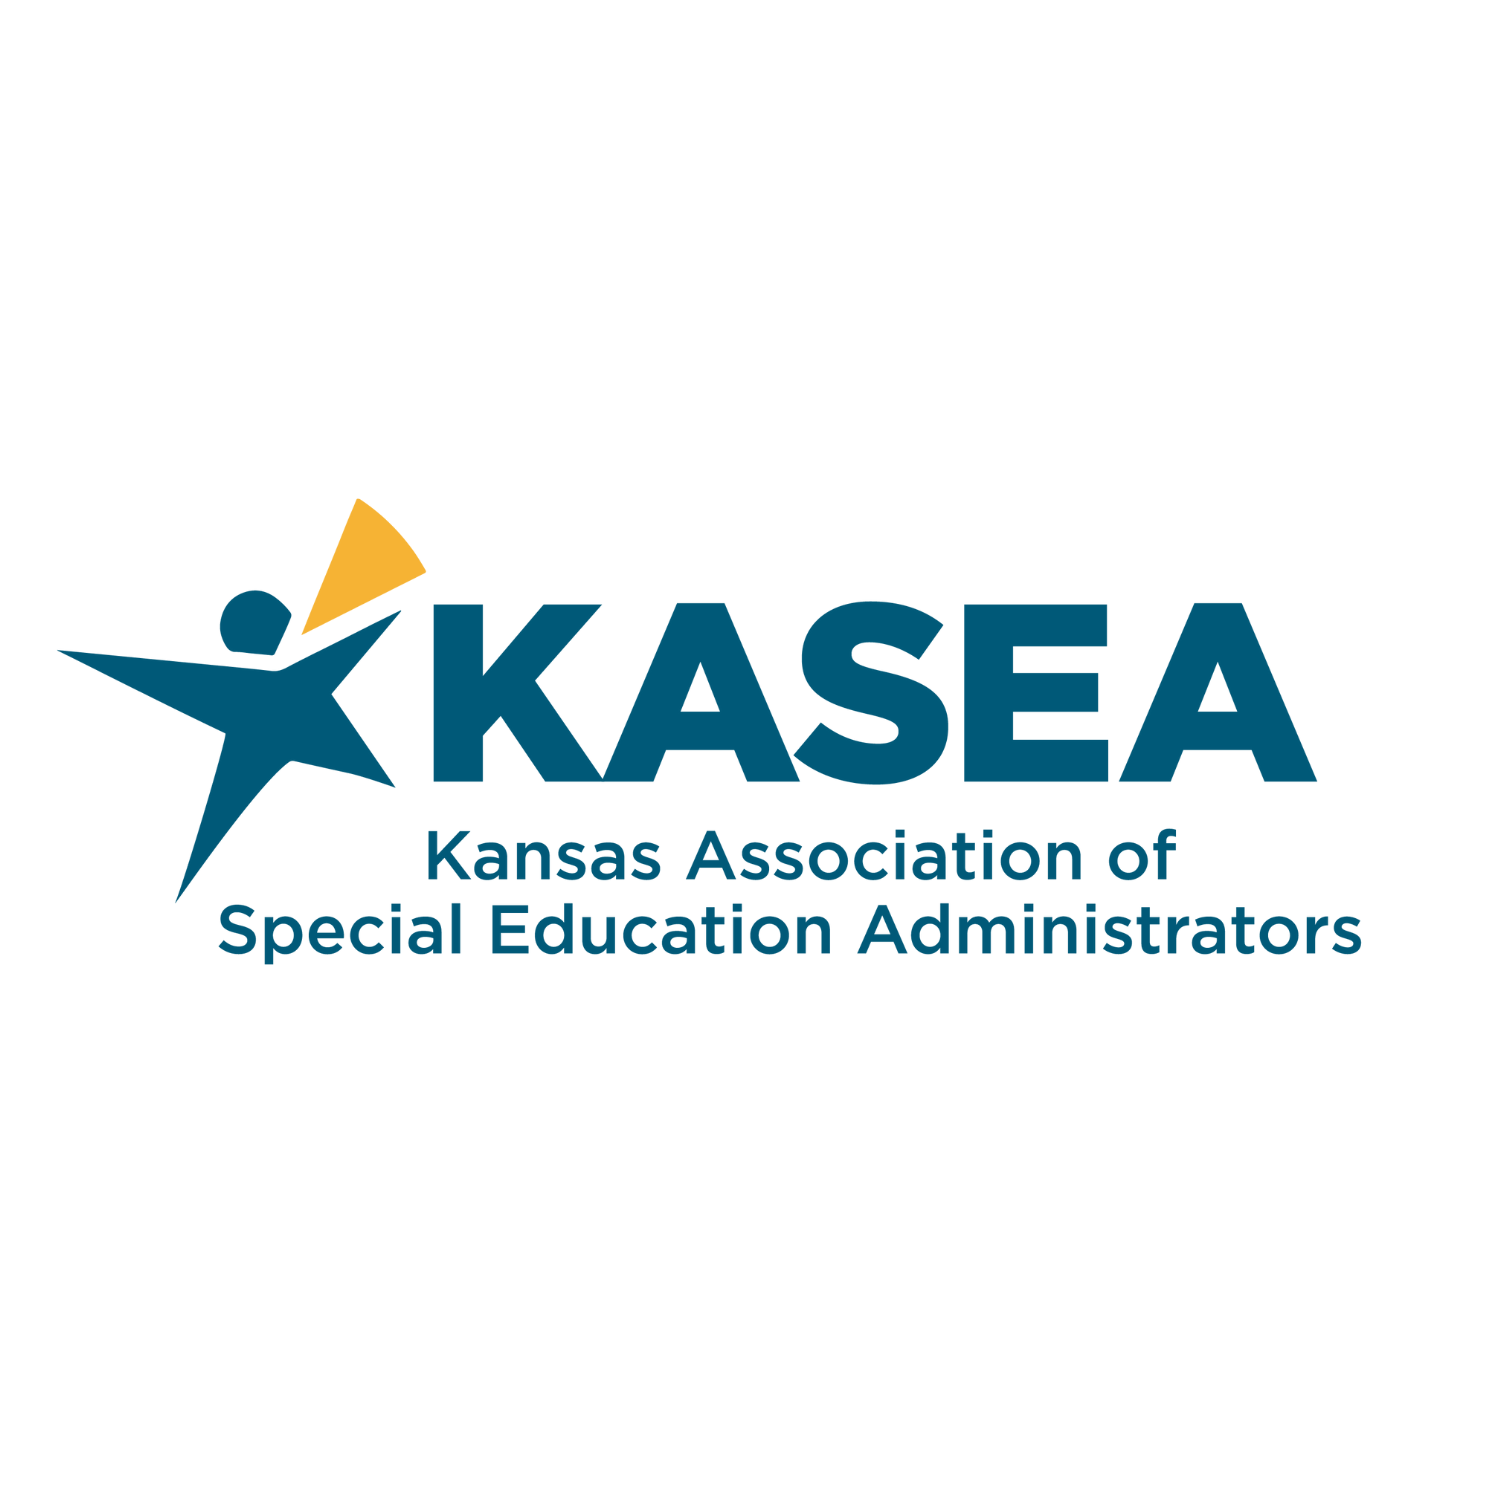 Kansas Association of Special Education Administrators